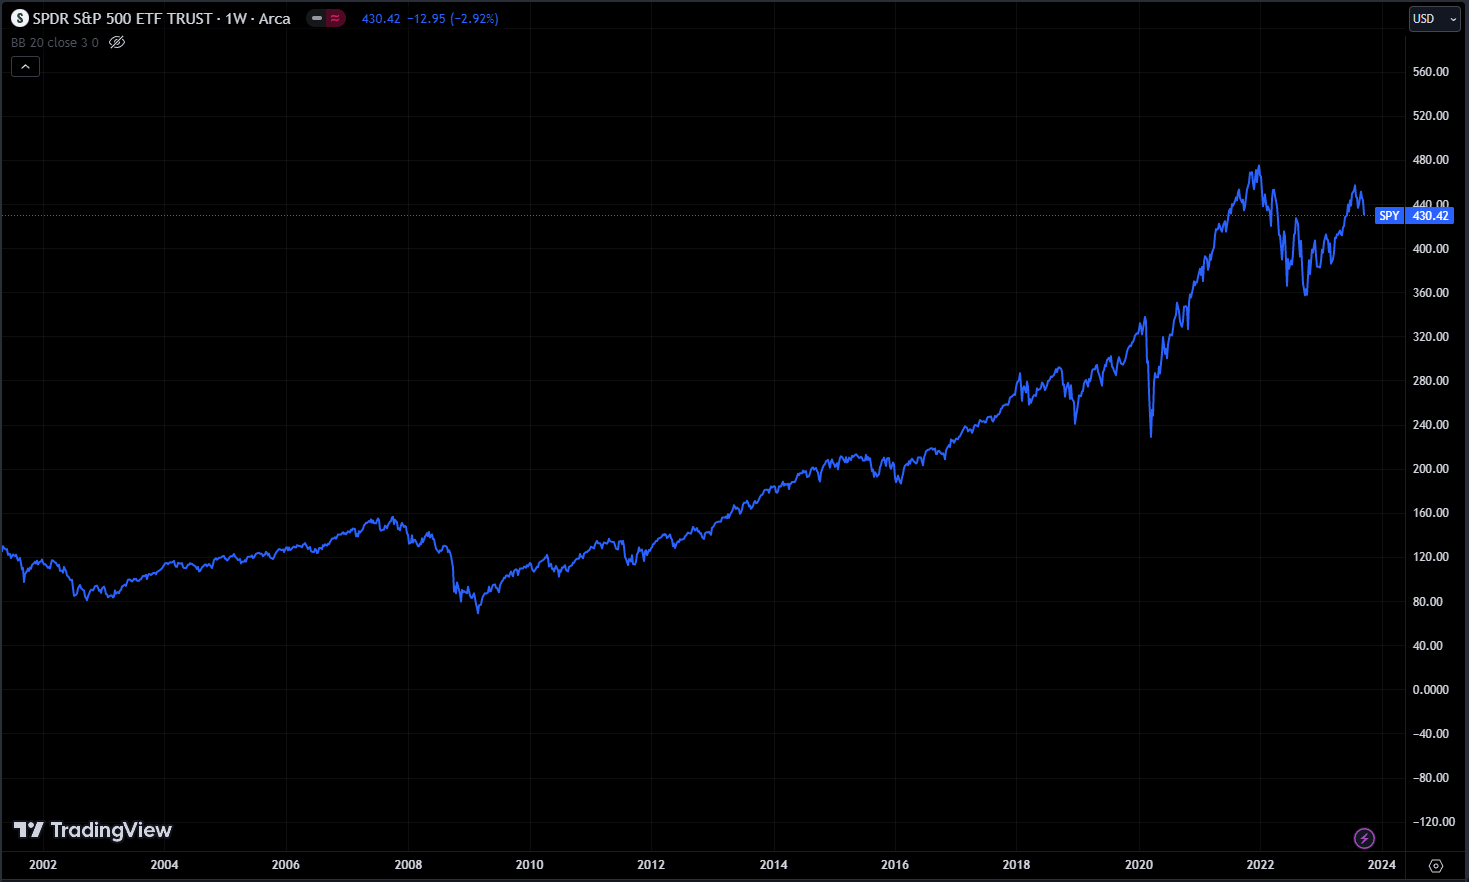 S&P 500 decades performance